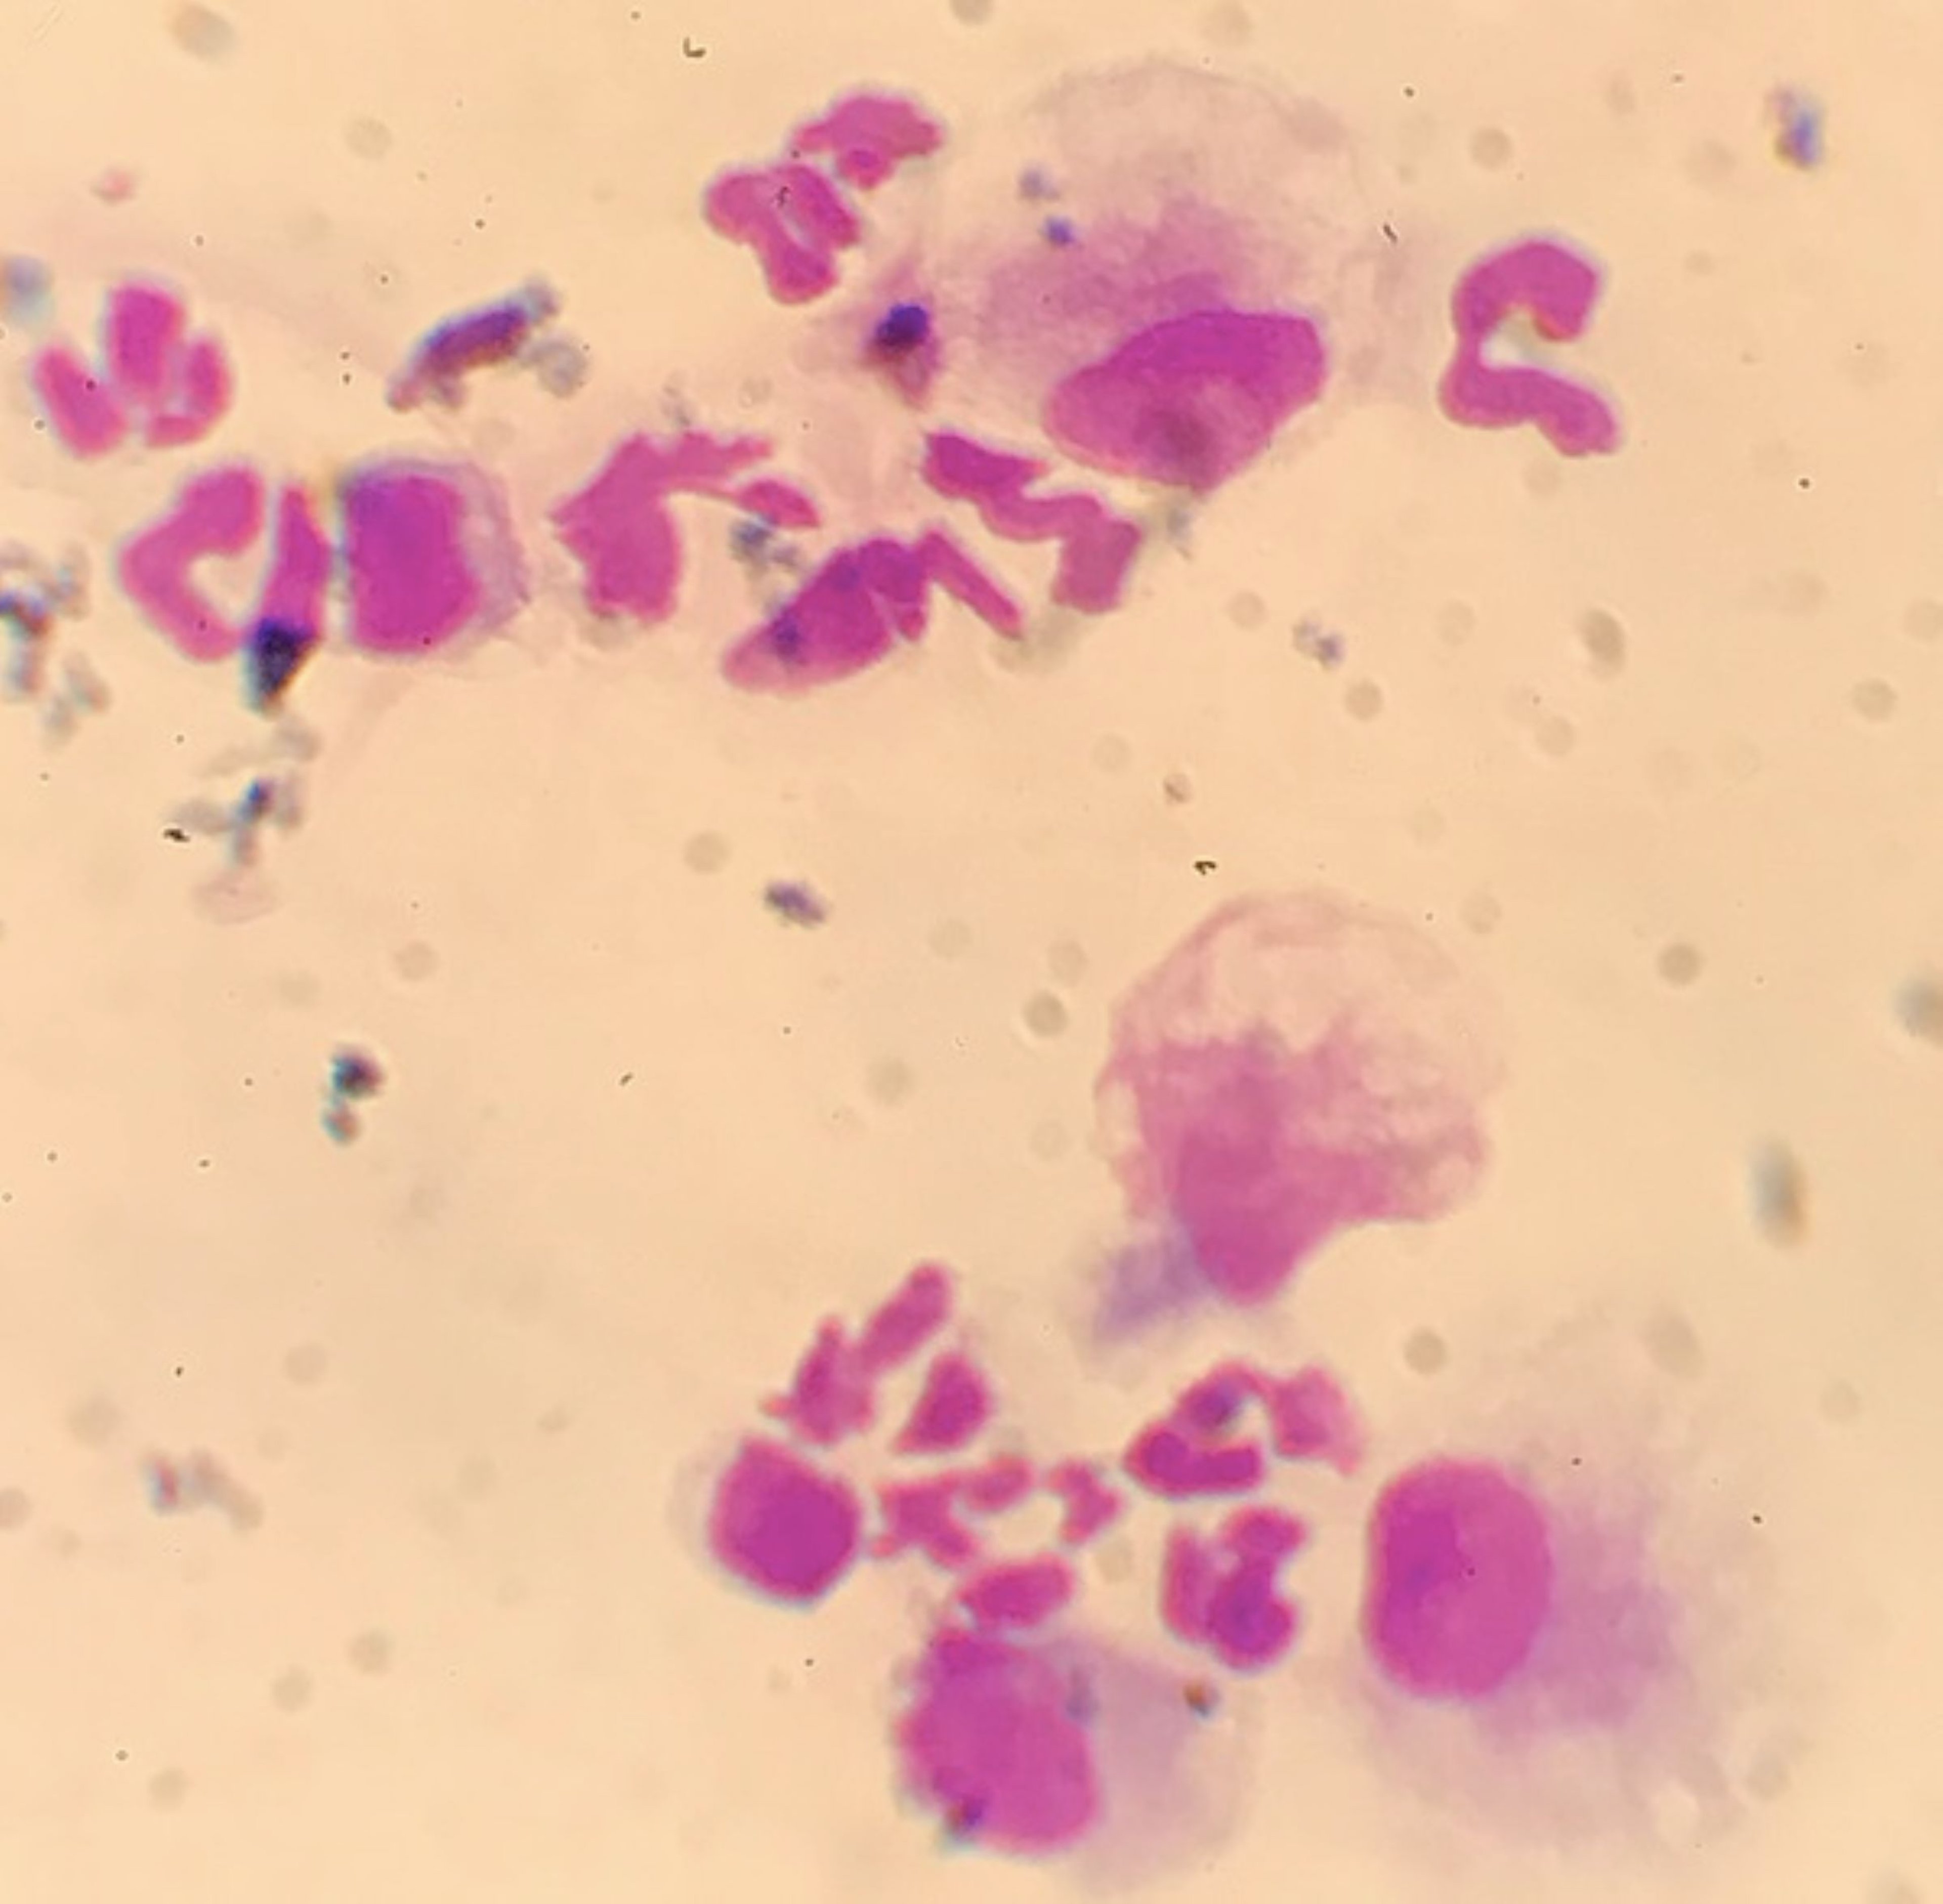 Feline infectious peritonitis, effusion, cytological image